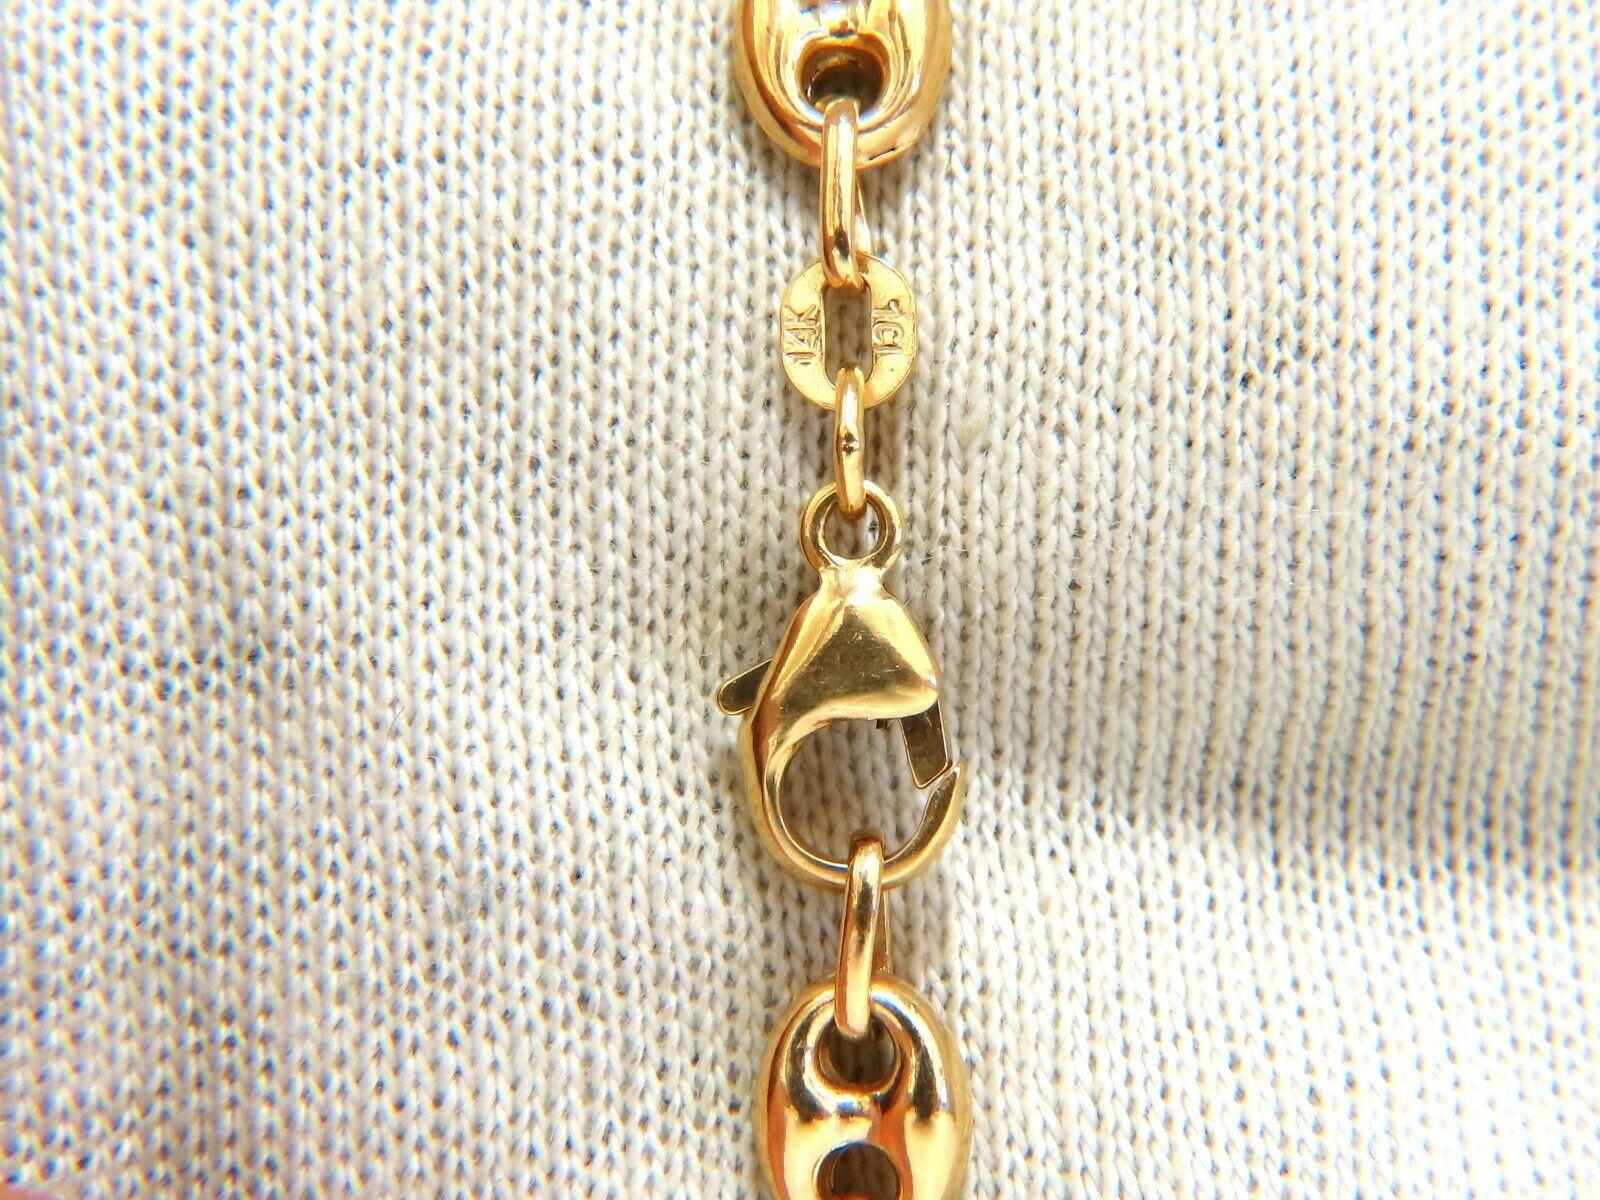 Mariner sailor link.

6mm wide bracelet.

14 karat yellow gold 6.9

Chain measure 7 inch

Secure lock